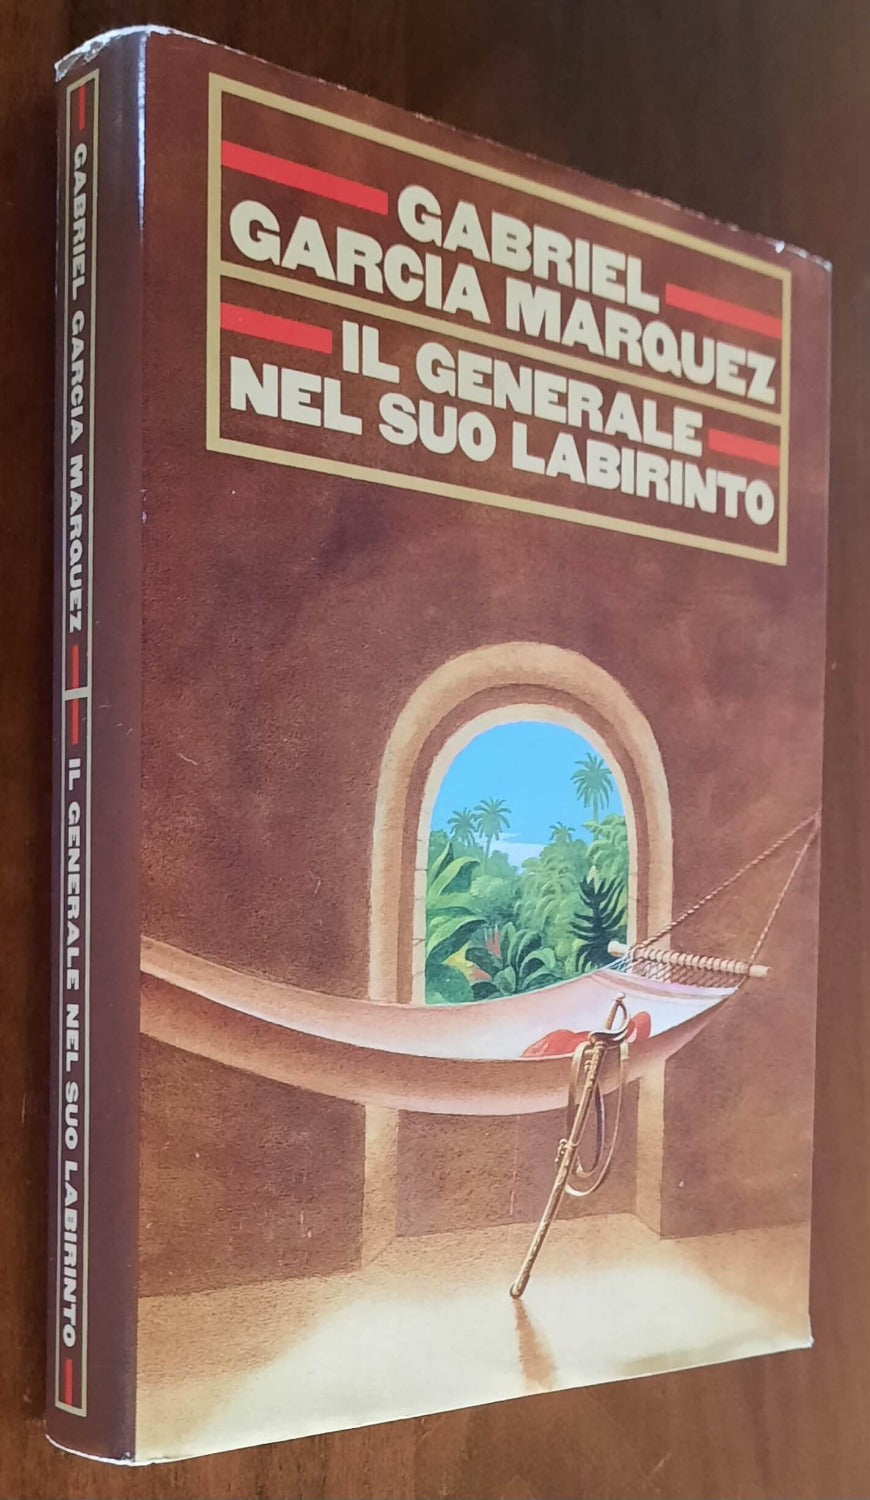 Il generale nel suo labirinto - di Gabriel García Márquez - CDE